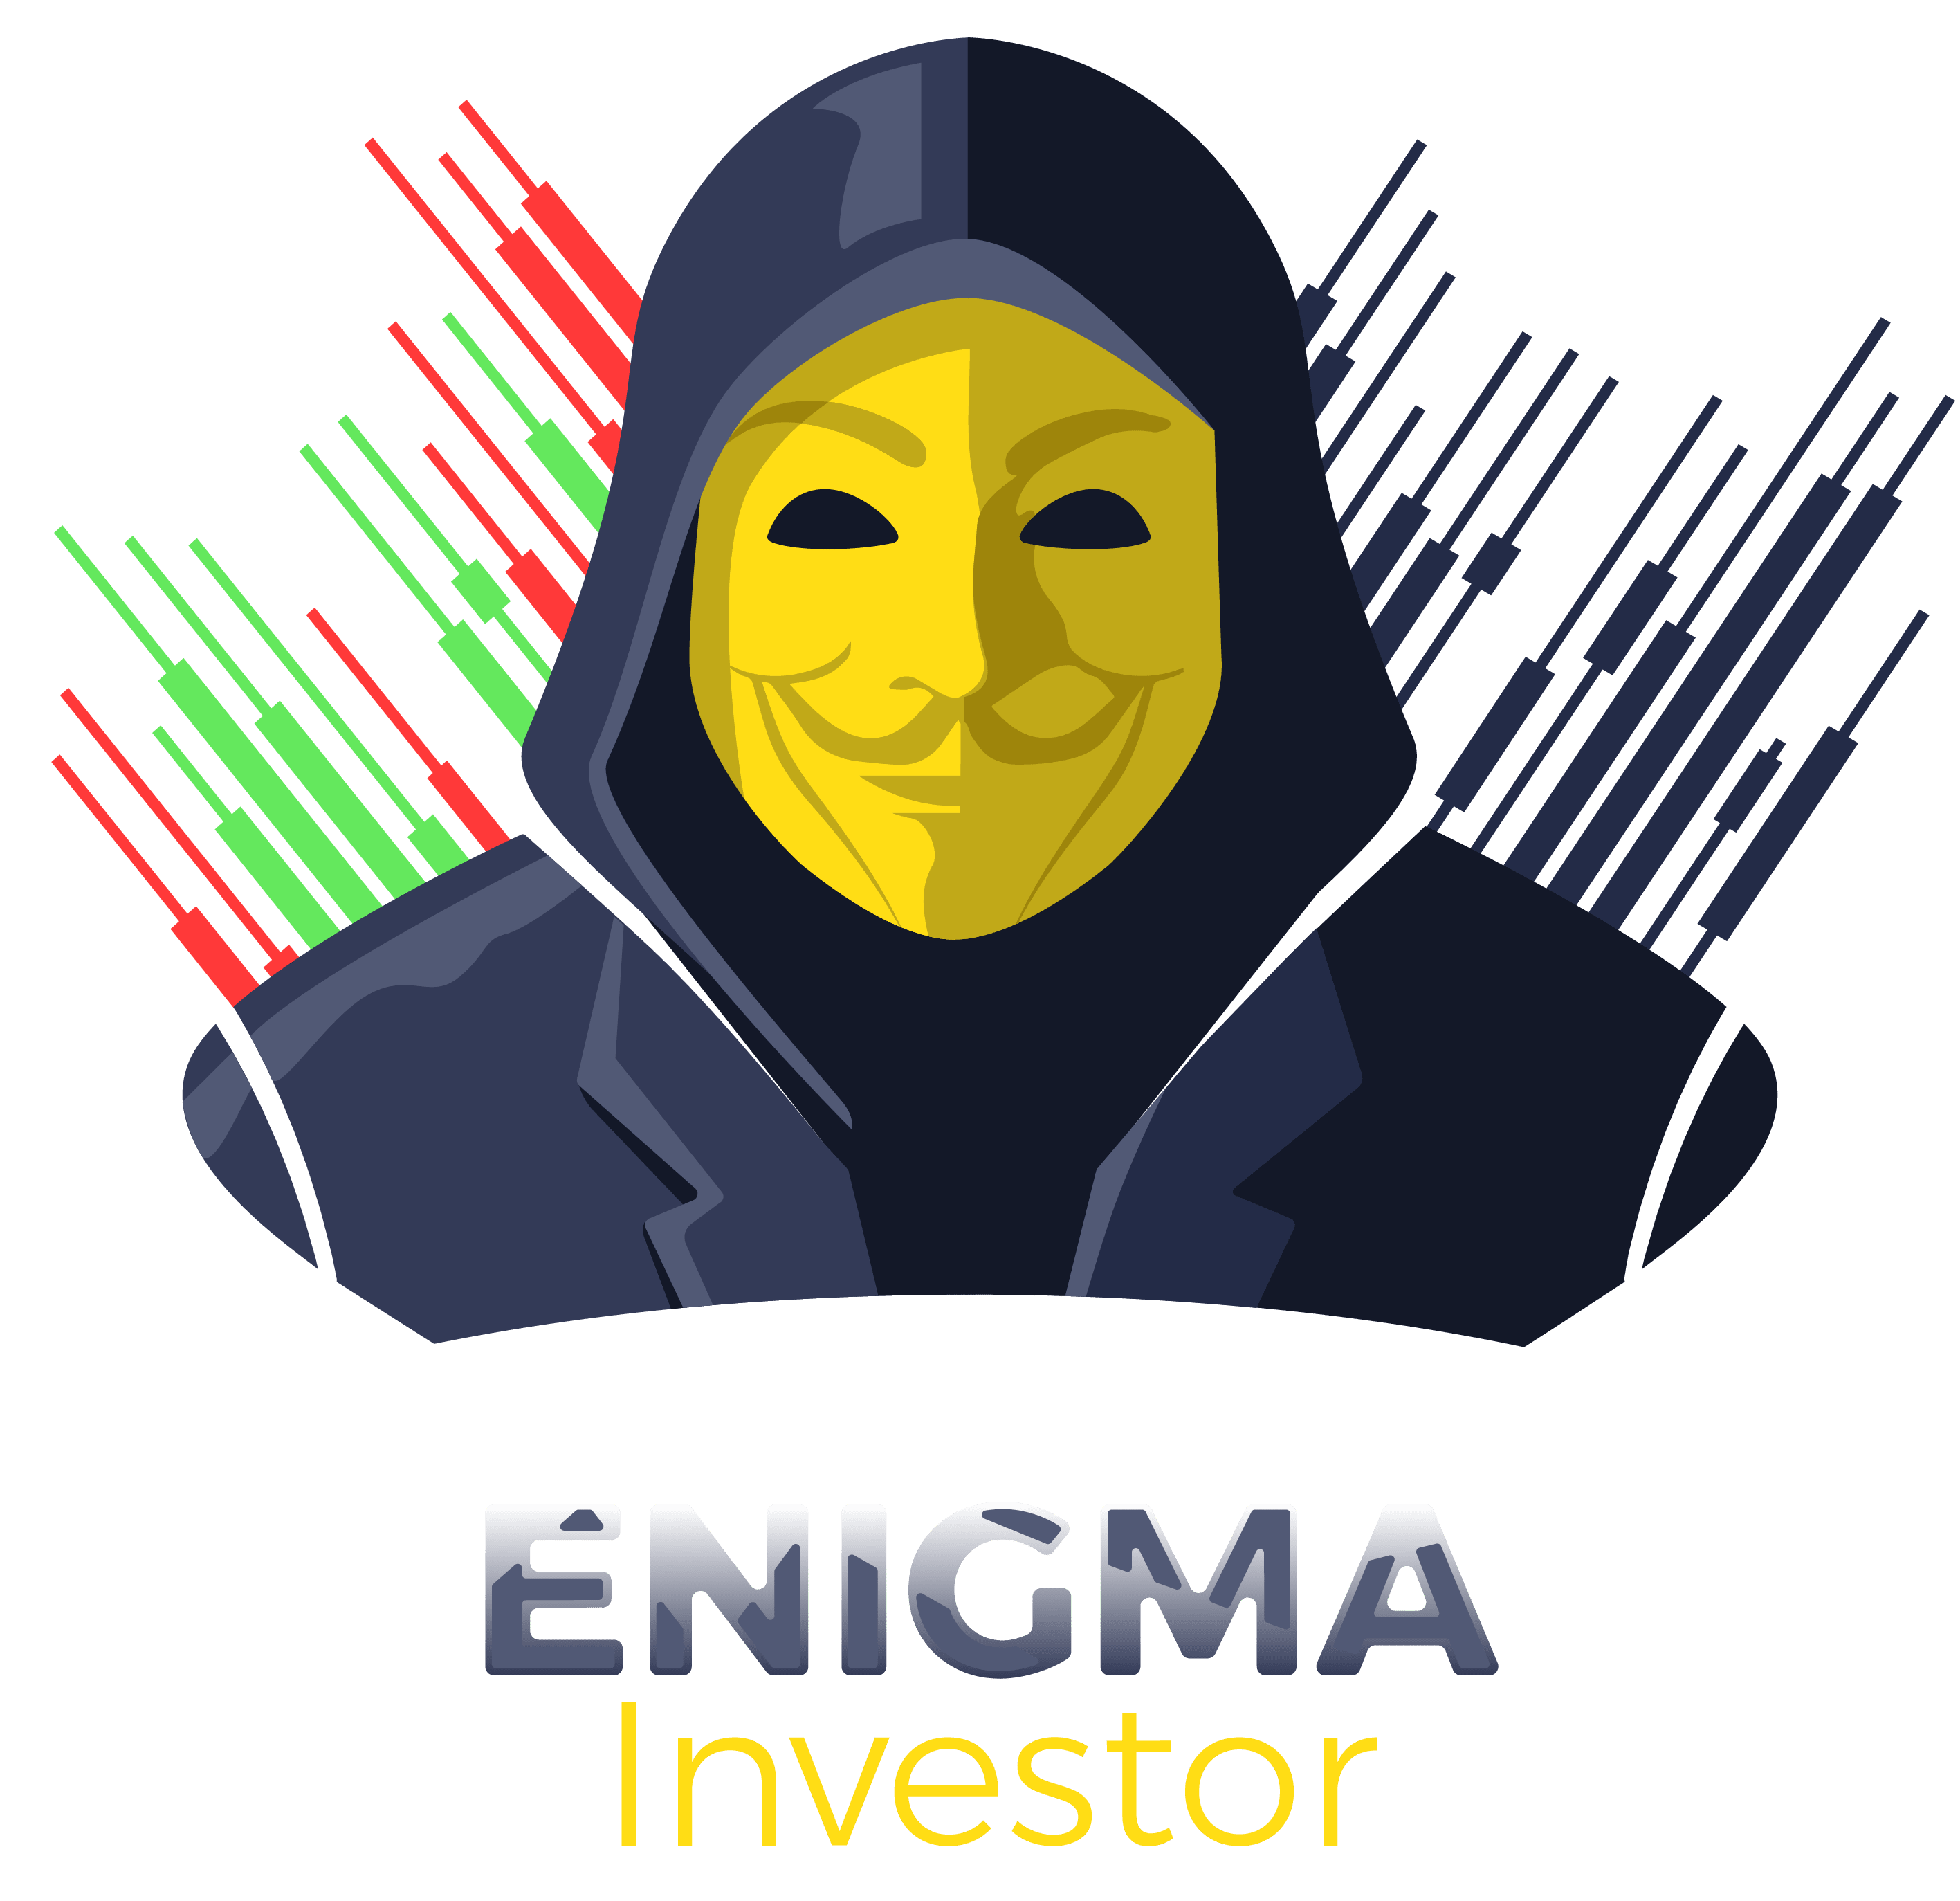 Enigma Investor Logo.png